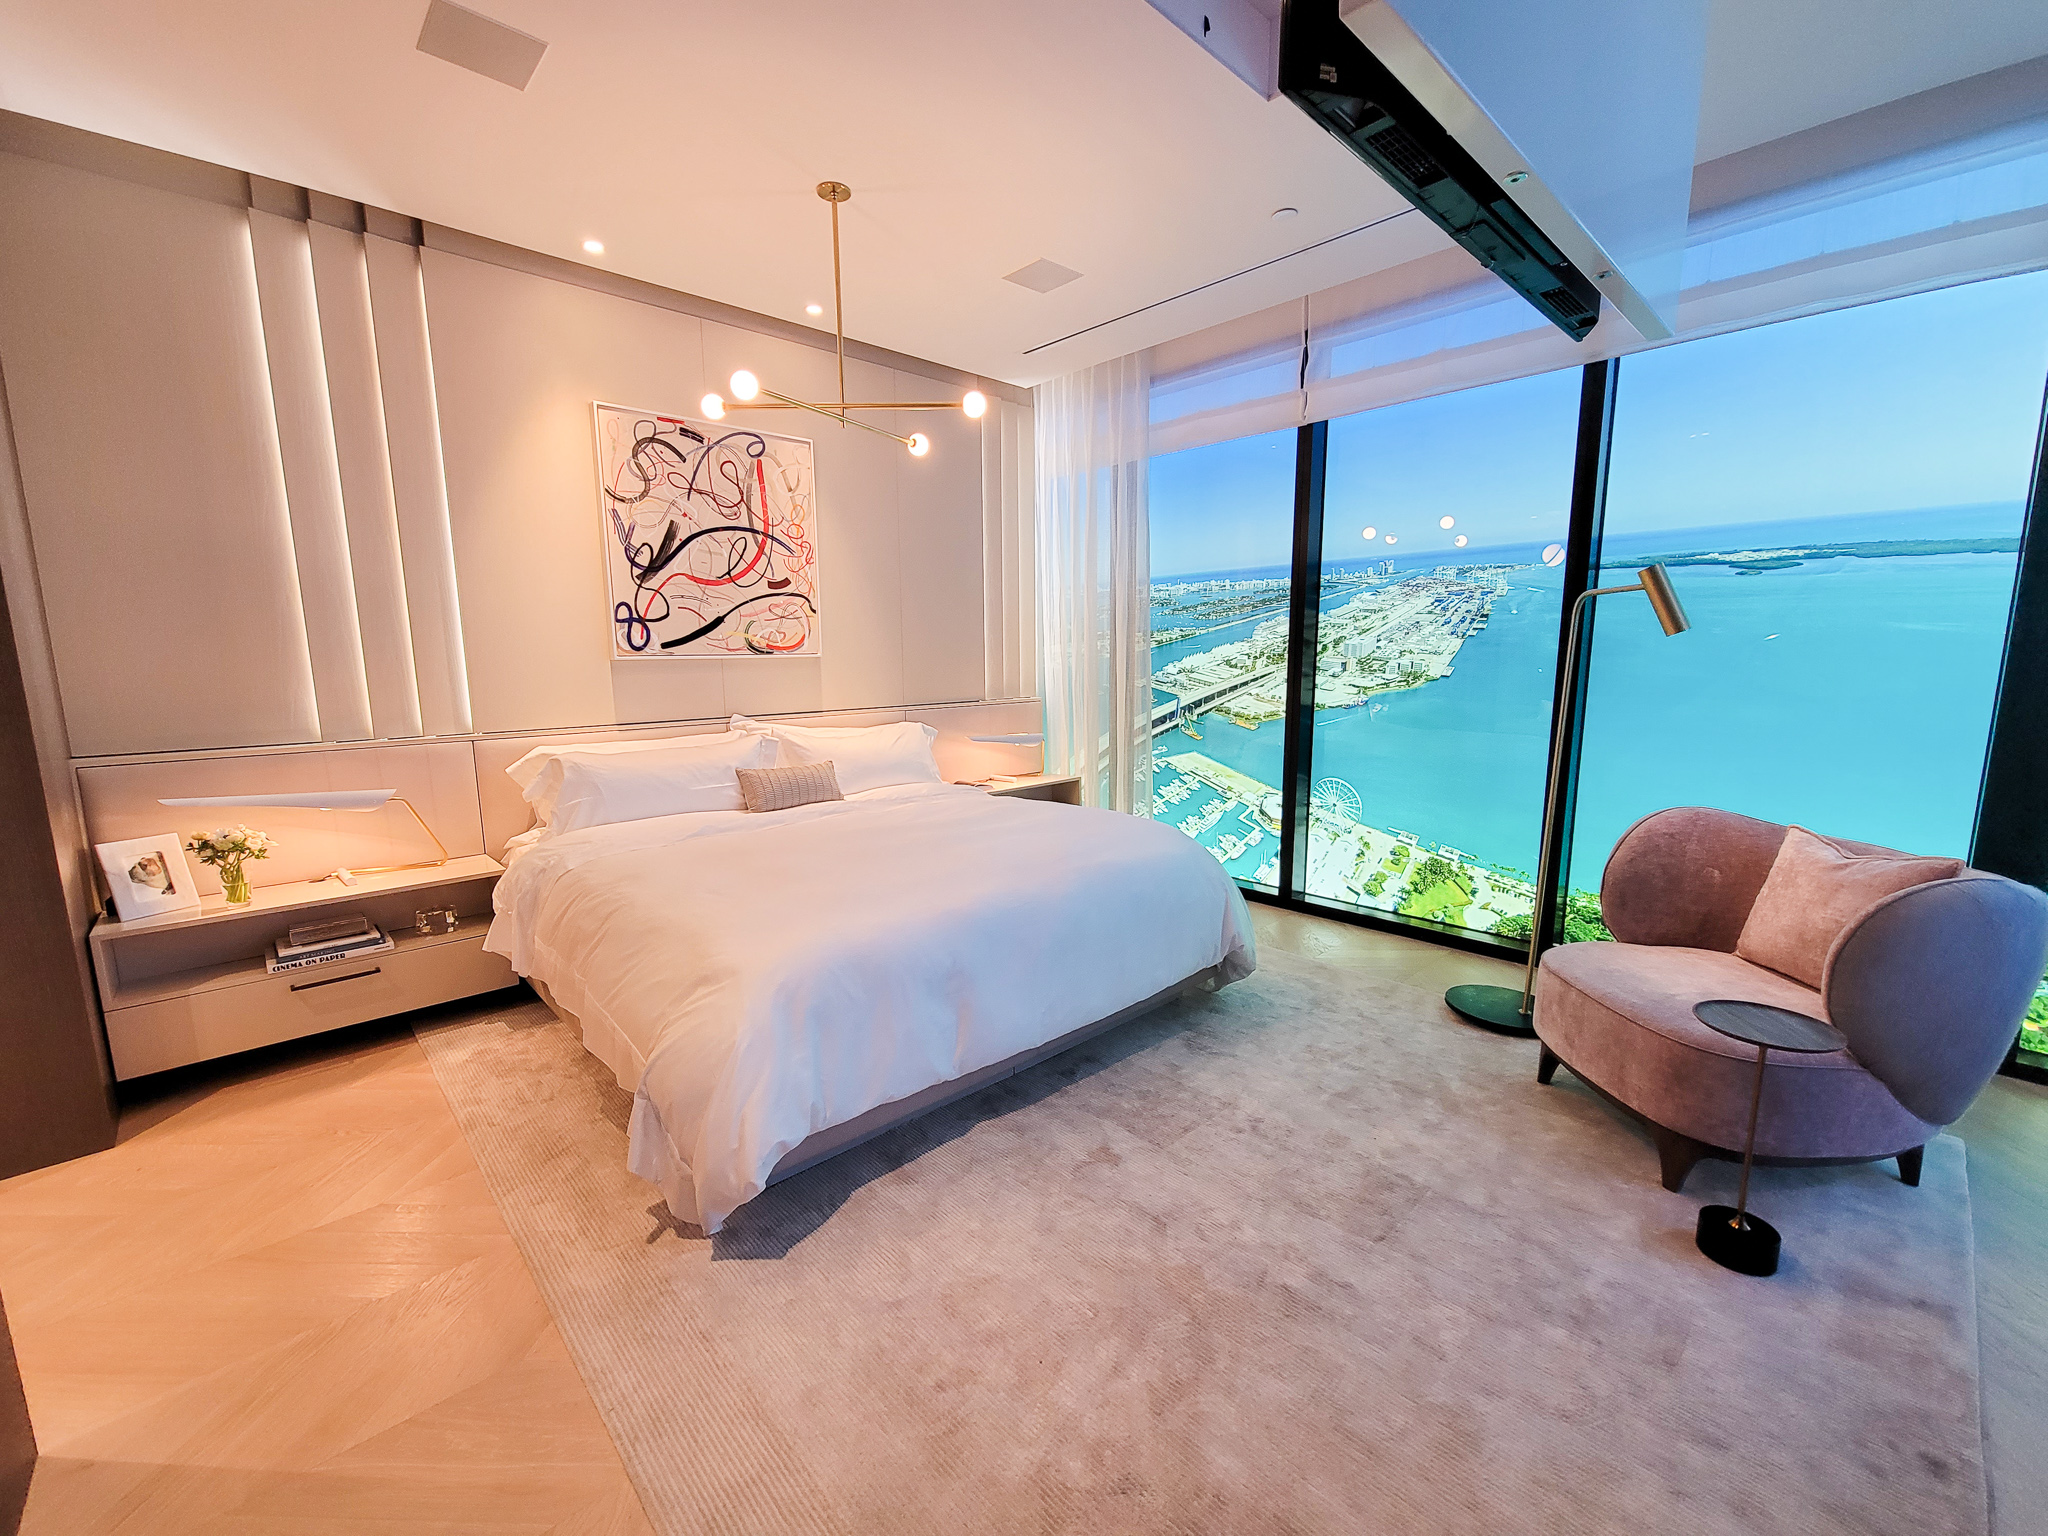 Master Bedroom. Photo by Oscar Nunez | Skylalign.